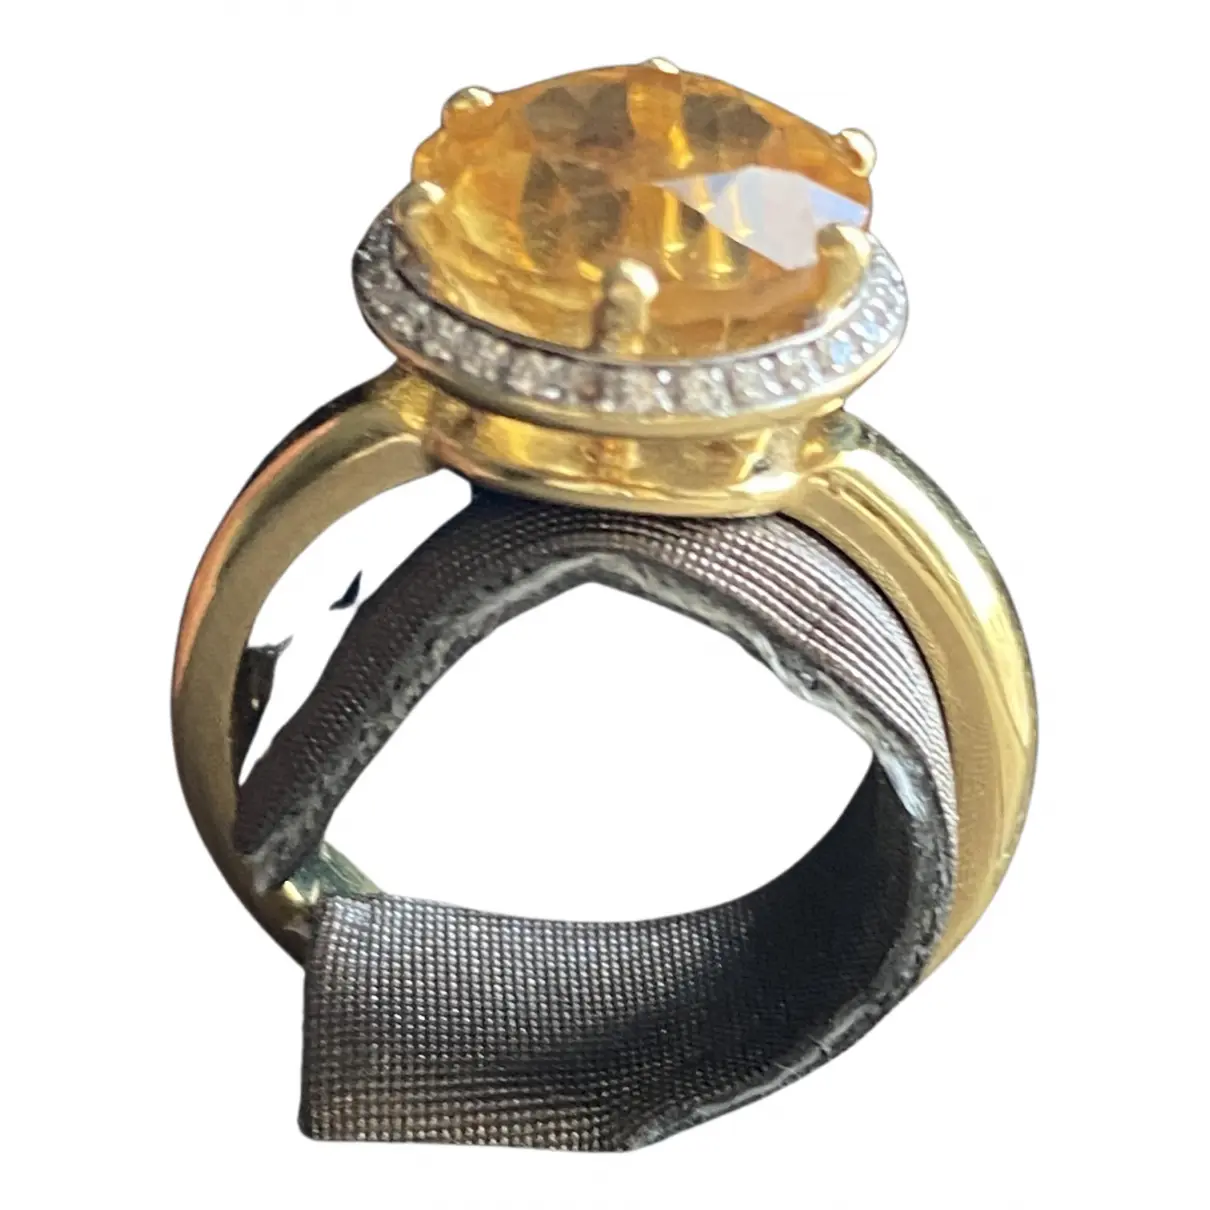 Buy Damiani Yellow gold ring online